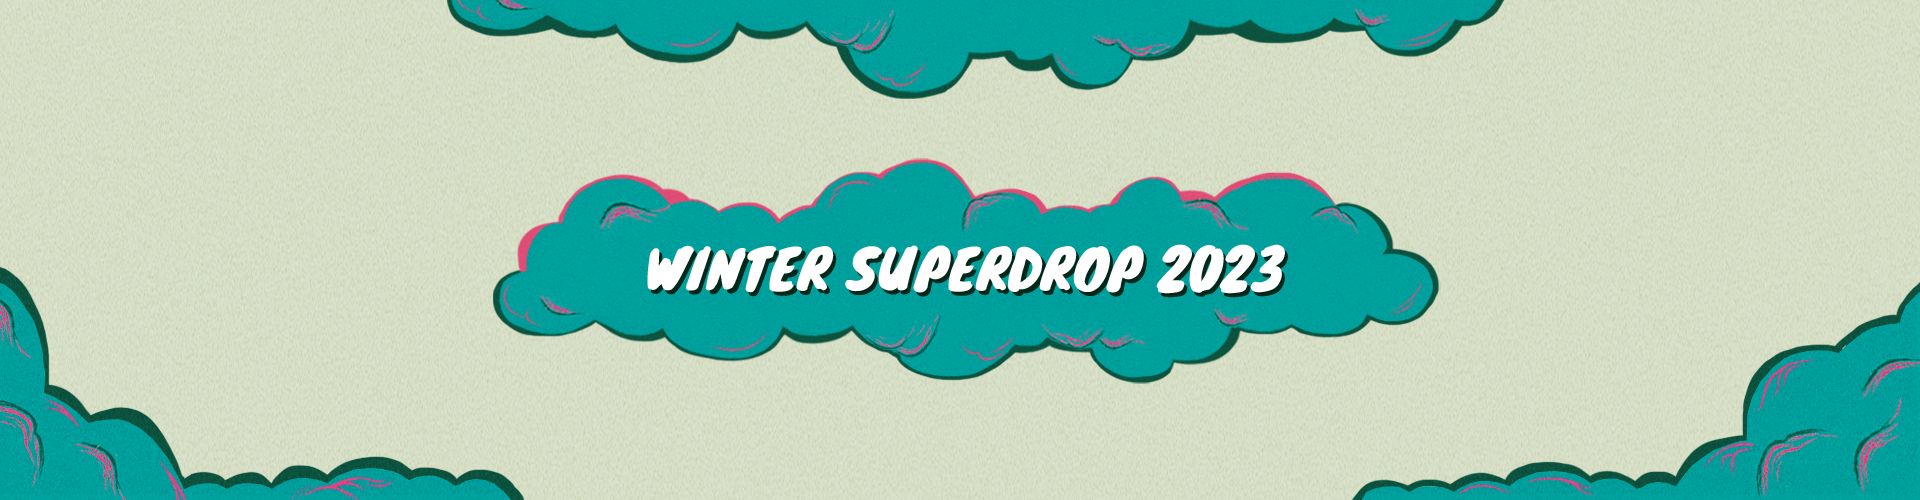 Winter Superdrop 2023 | Secret Lair